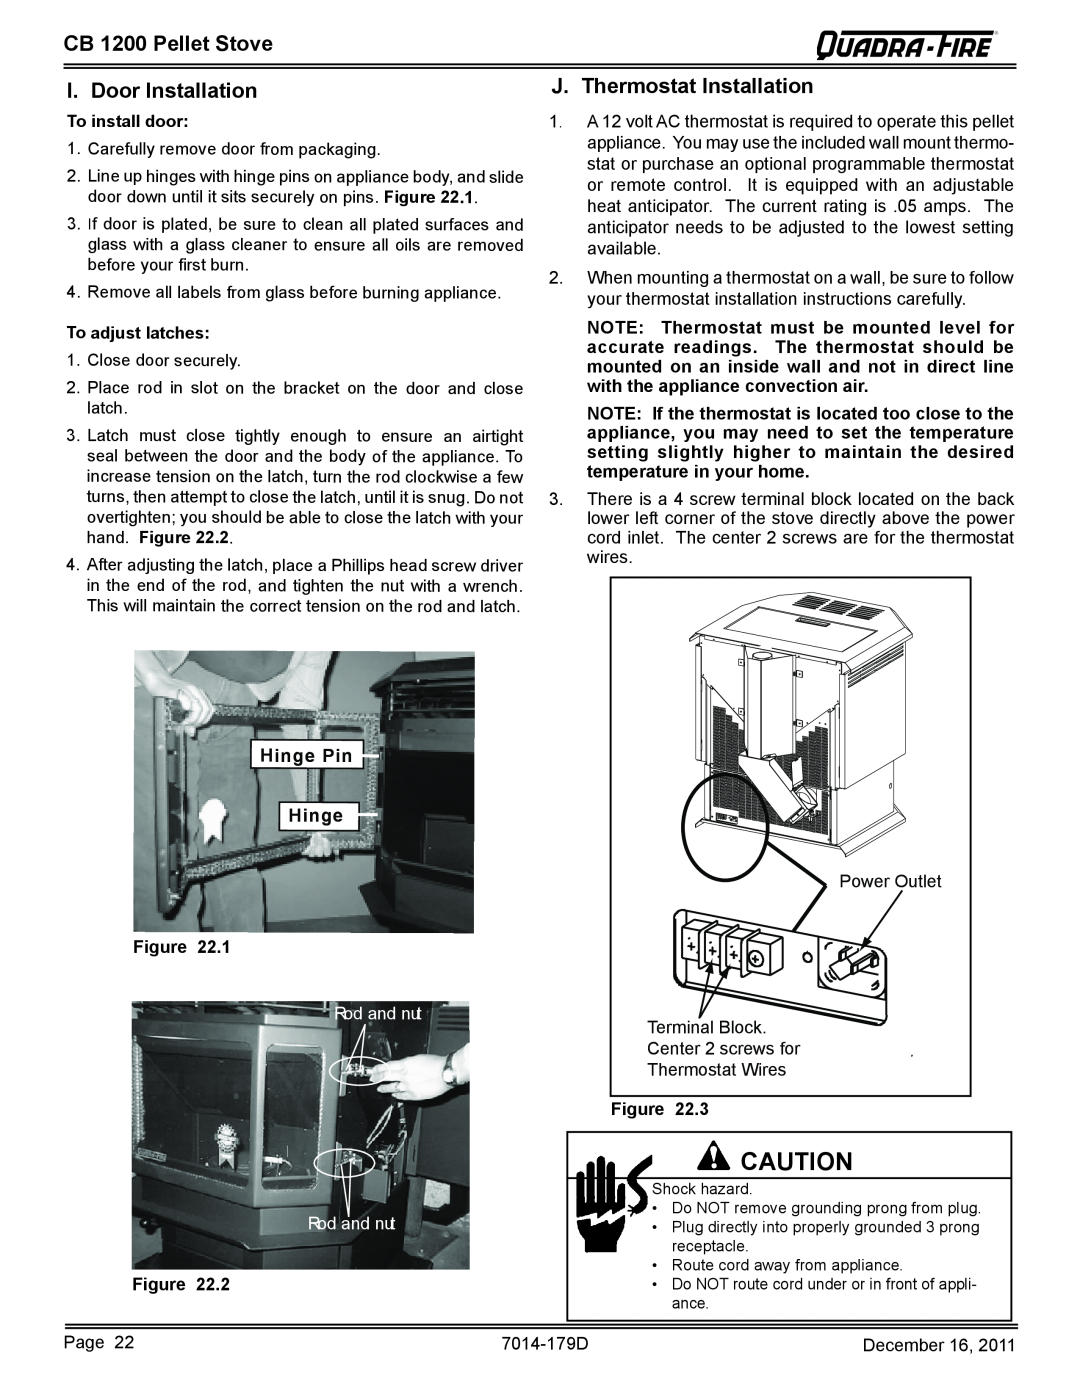 Quadra-Fire CB1200M-MBK owner manual CB 1200 Pellet Stove I. Door Installation, J. Thermostat Installation, Hinge Pin Hinge 